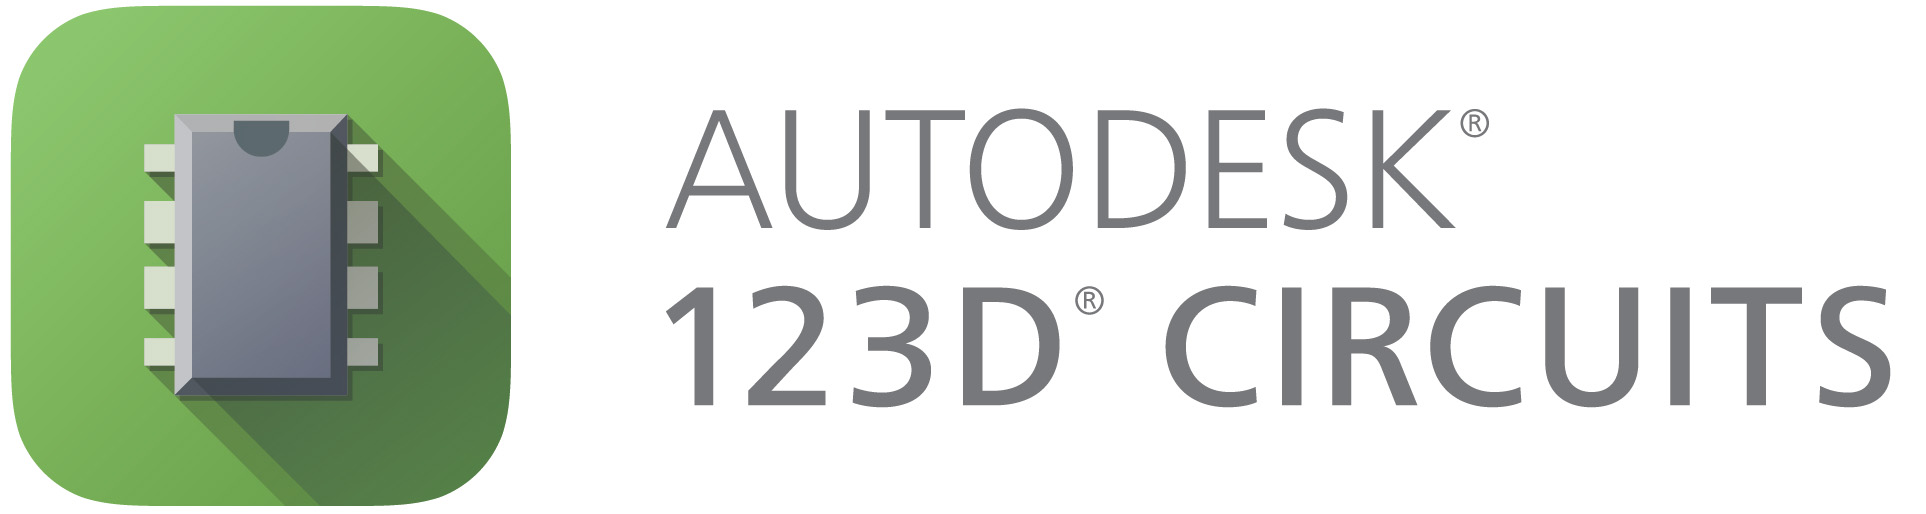 Autodesk 123d Circuits Free Breadboard Simulator Nerdhut